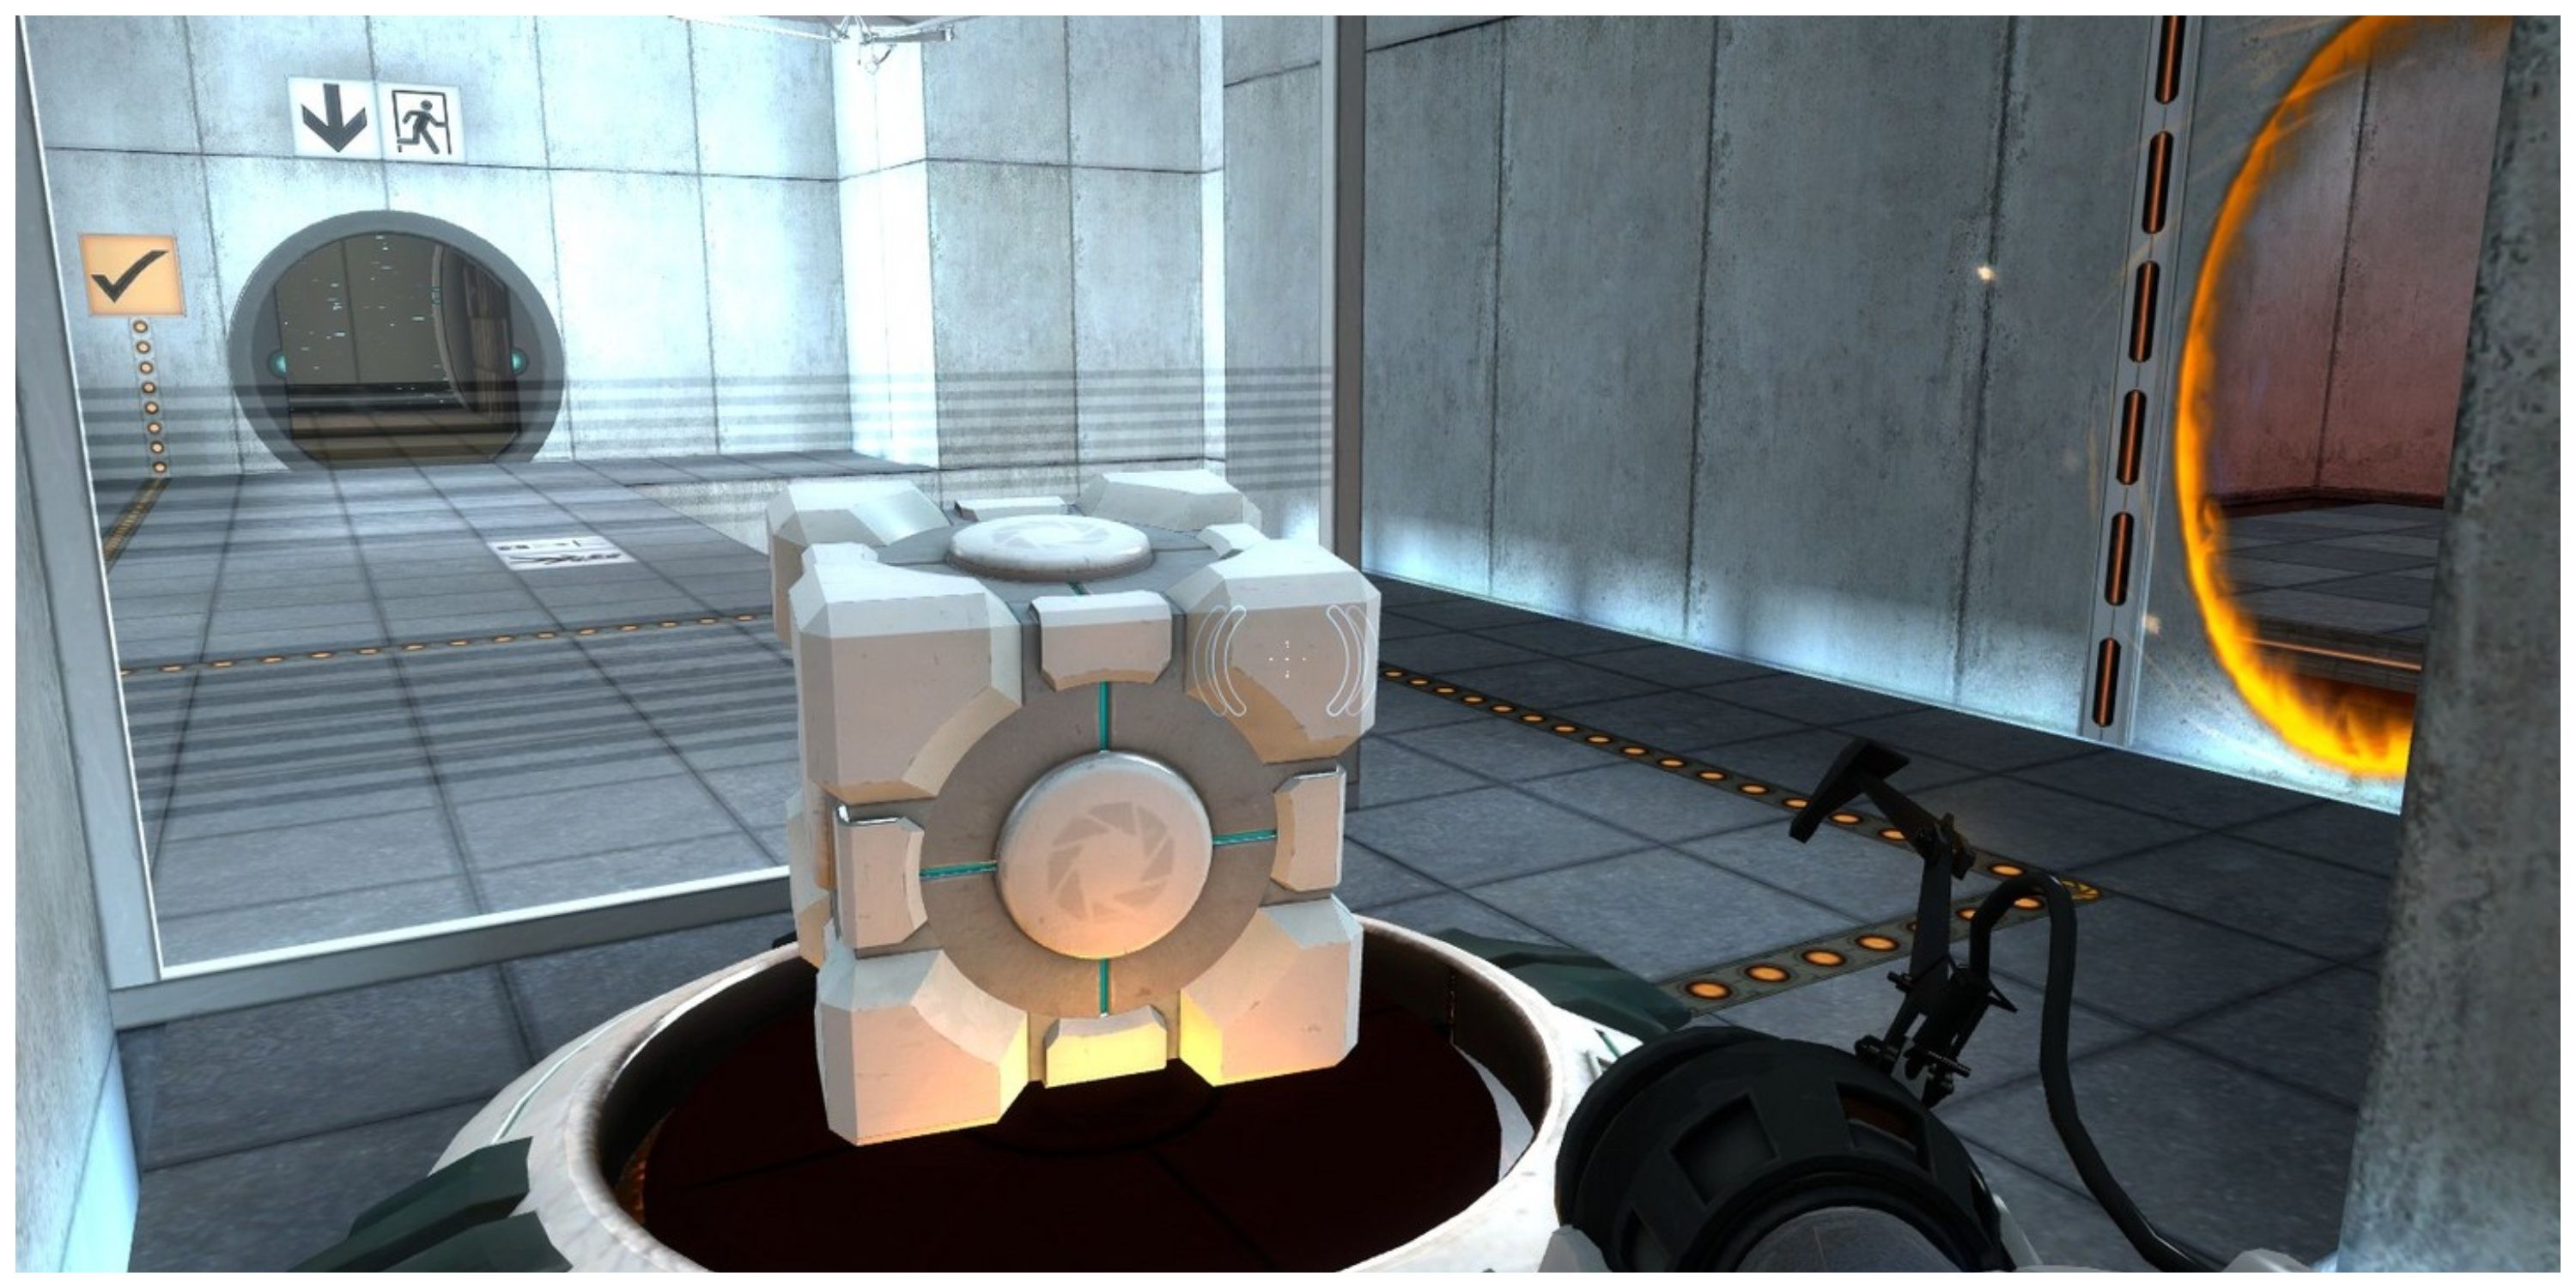 Portal staring at a companion cube